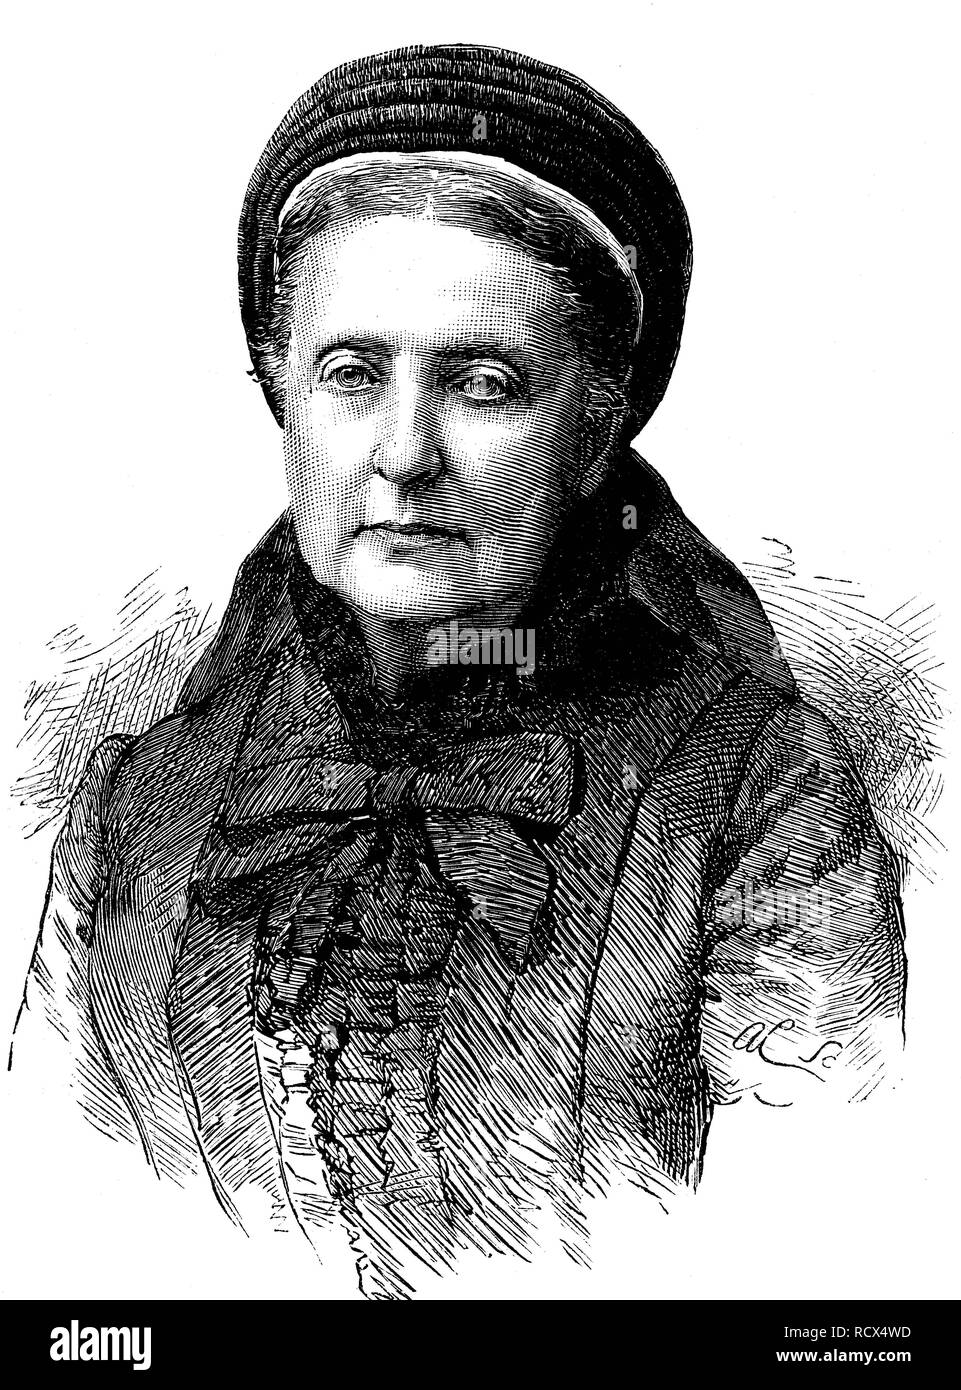 La princesa Clementina de Sajonia-coburgo, Clementina d'Orléans, 1817-1907, Princesa de Francia, xilografía, grabado histórico, 1880 Foto de stock